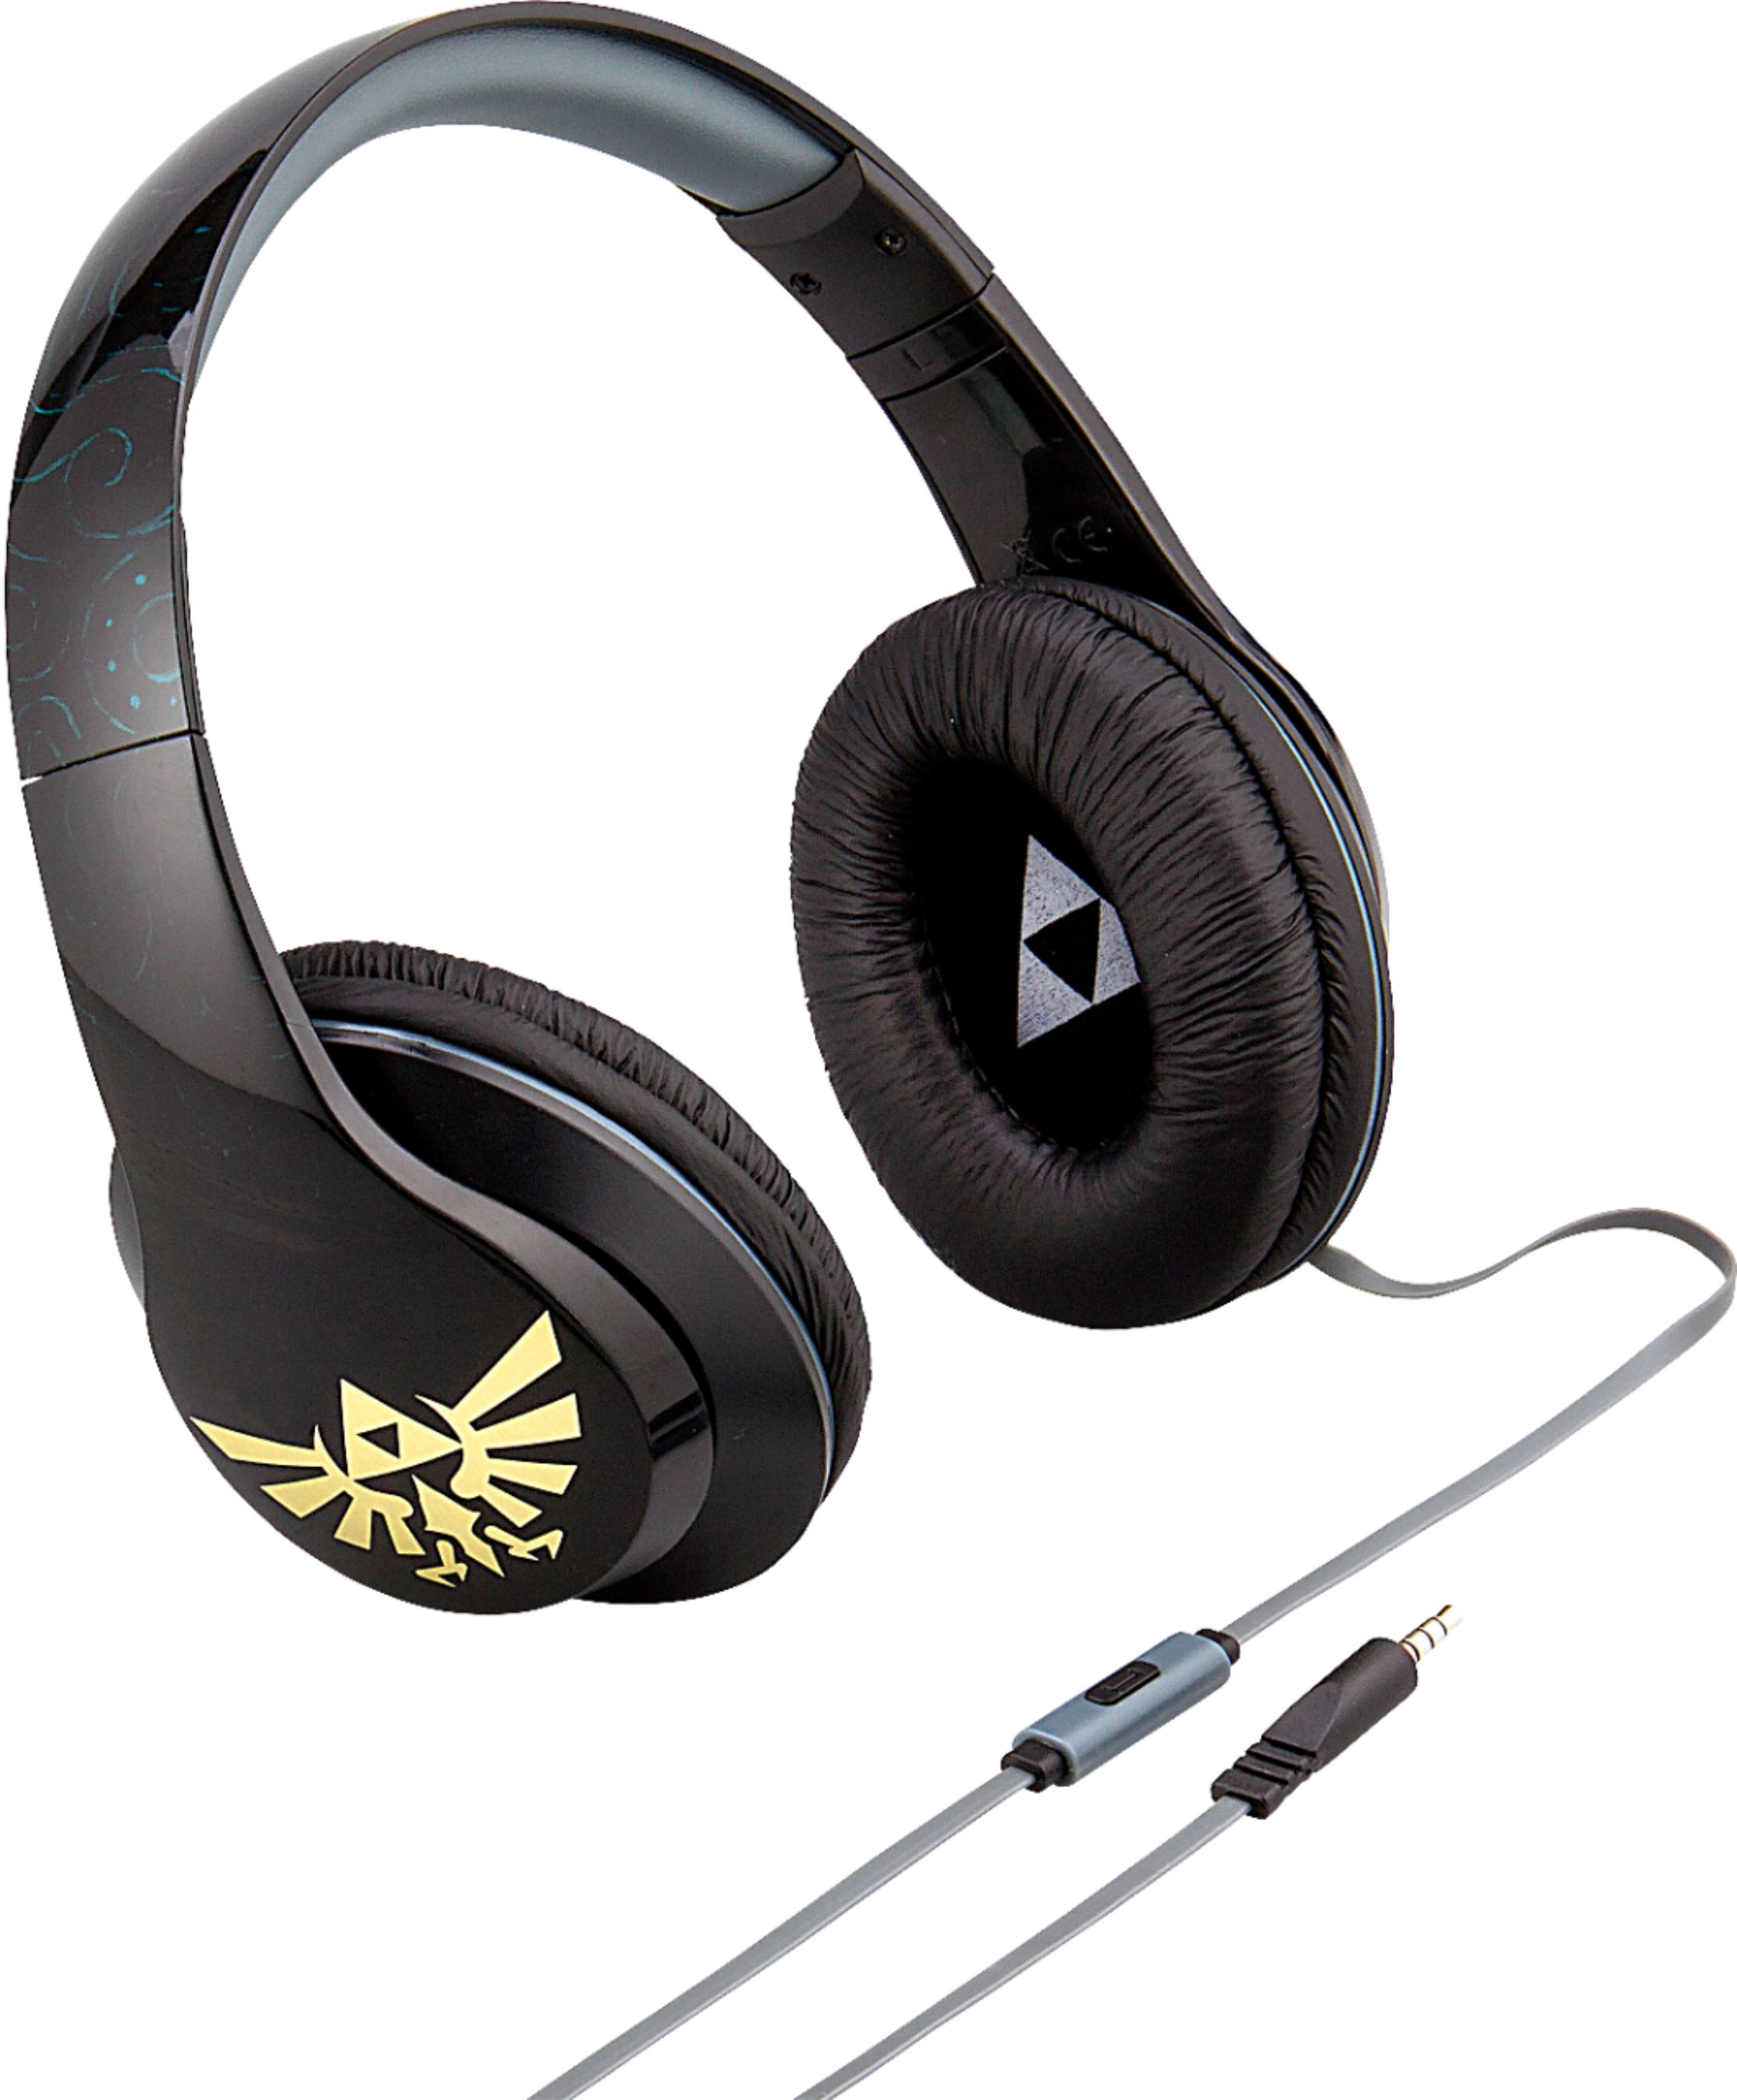 Angle View: Moshi - Avanti C Lightning Wired On-Ear Headphones - Black